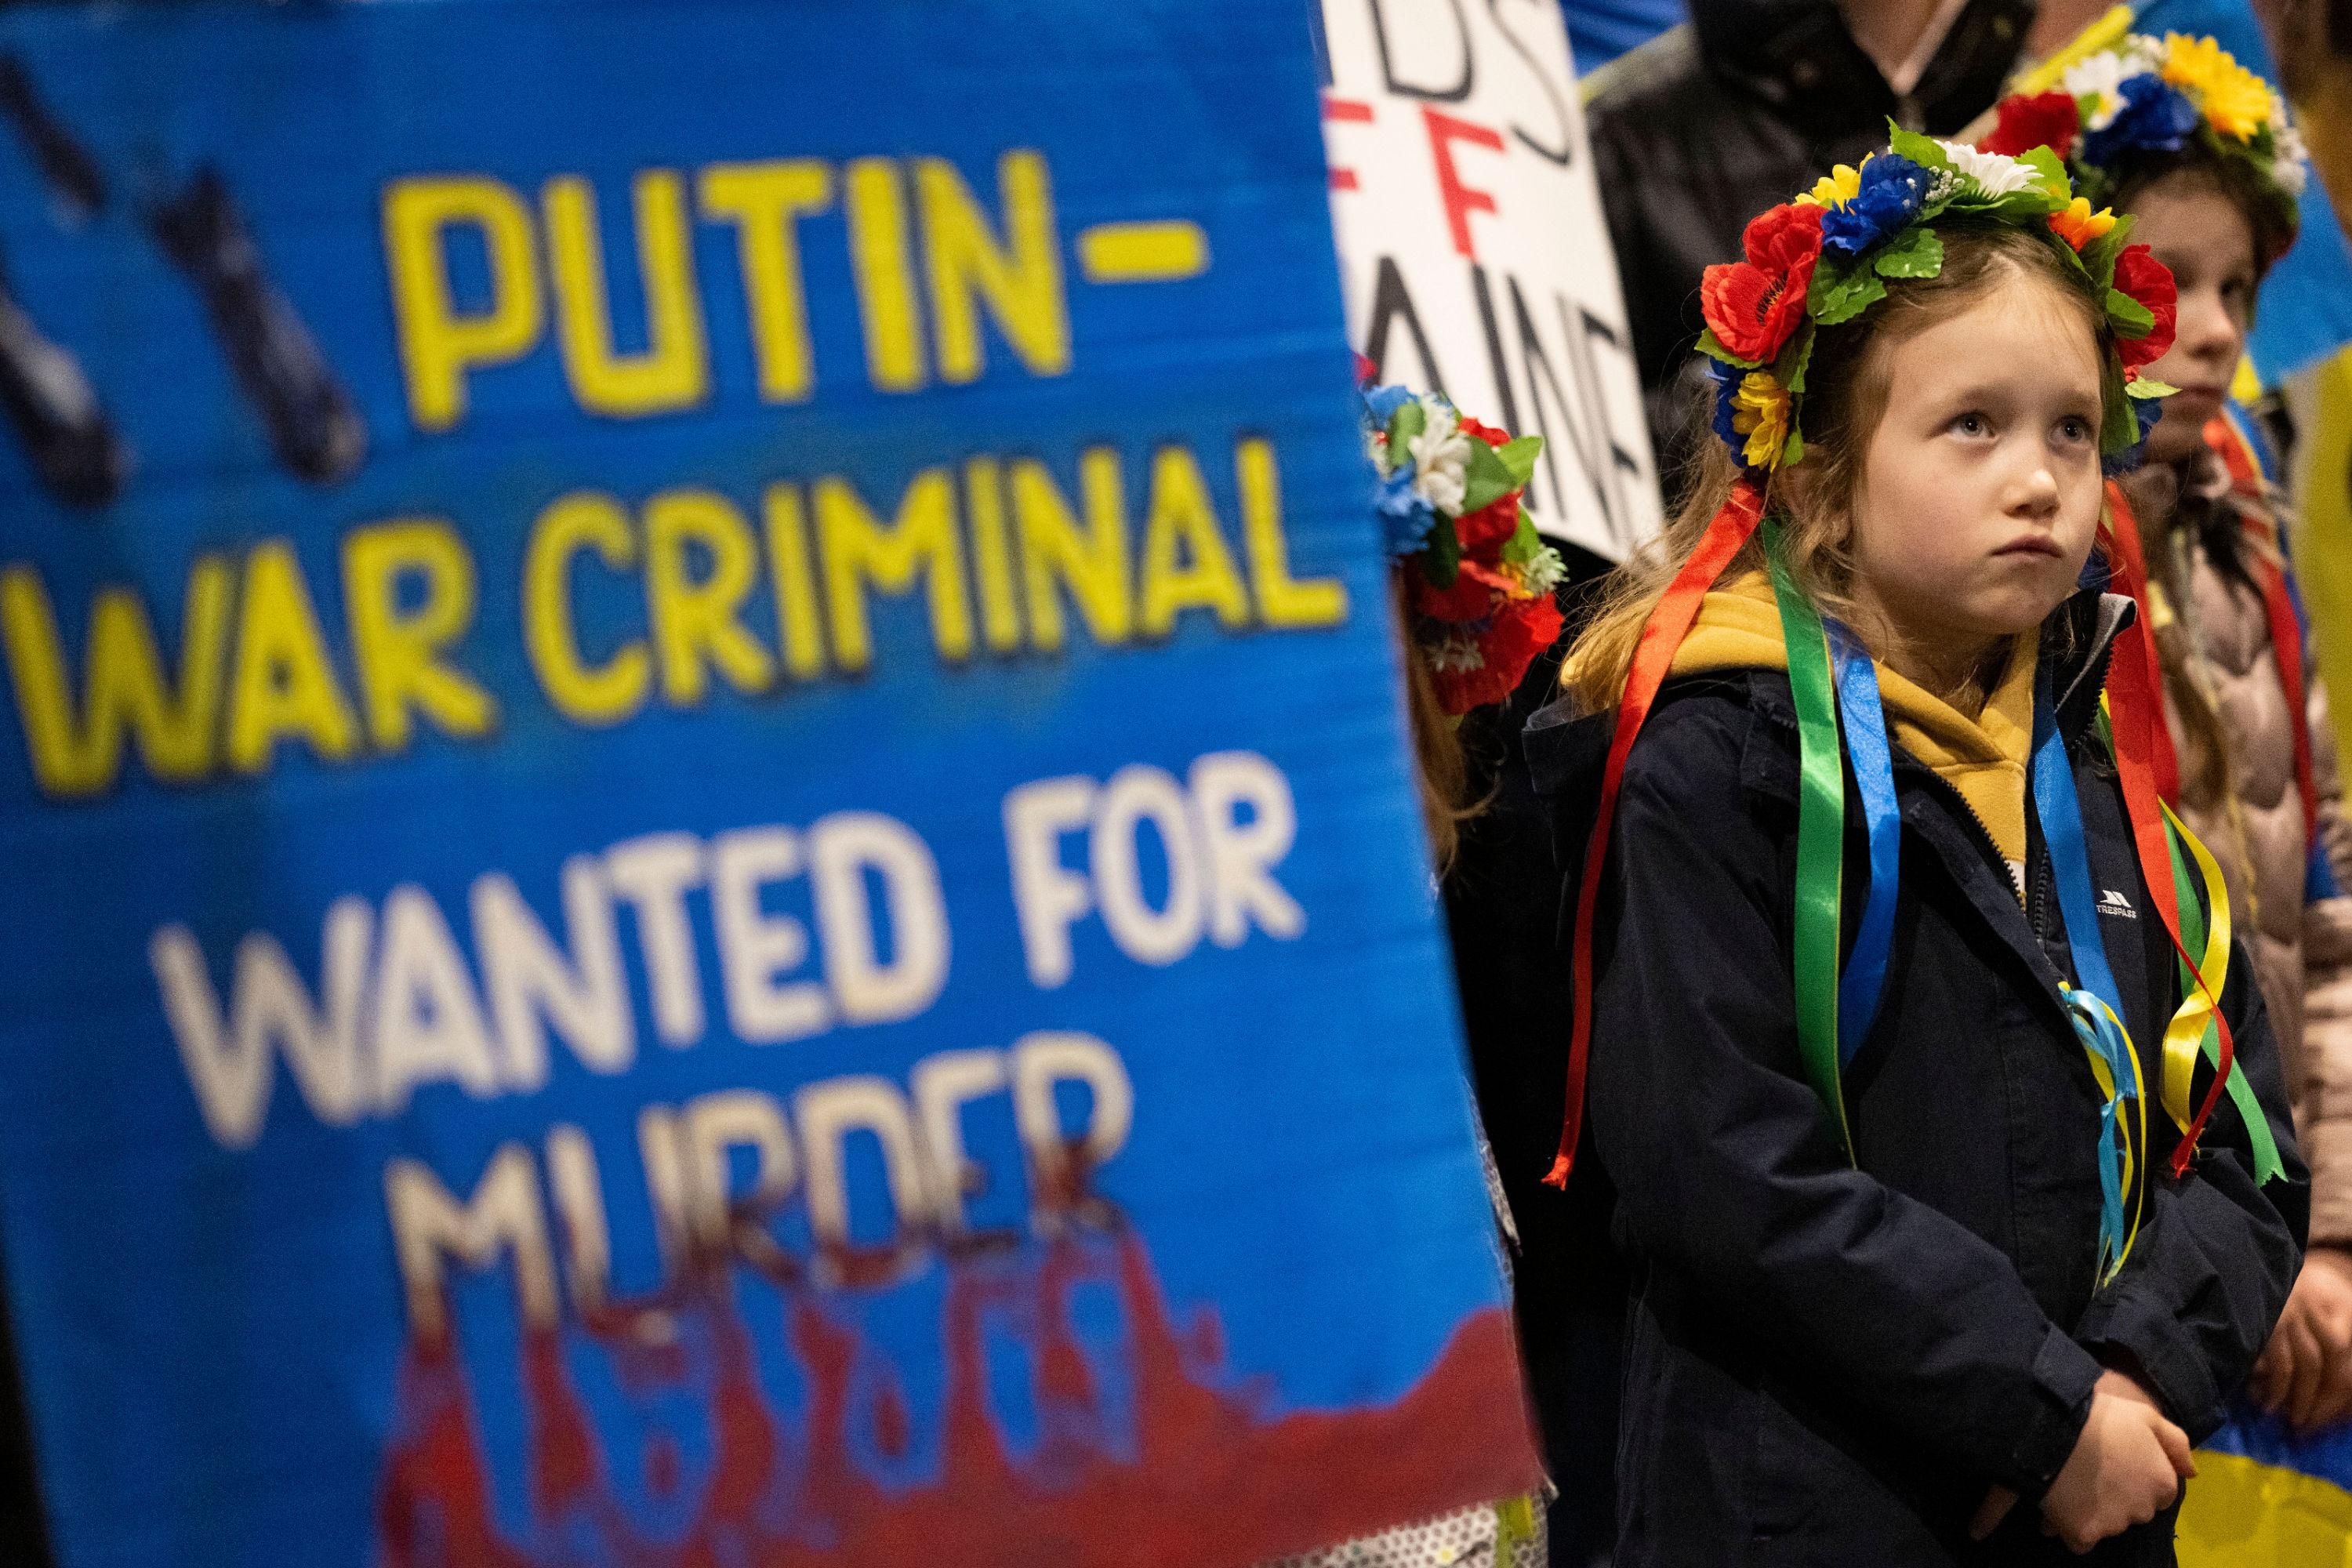 Putin - War Criminal